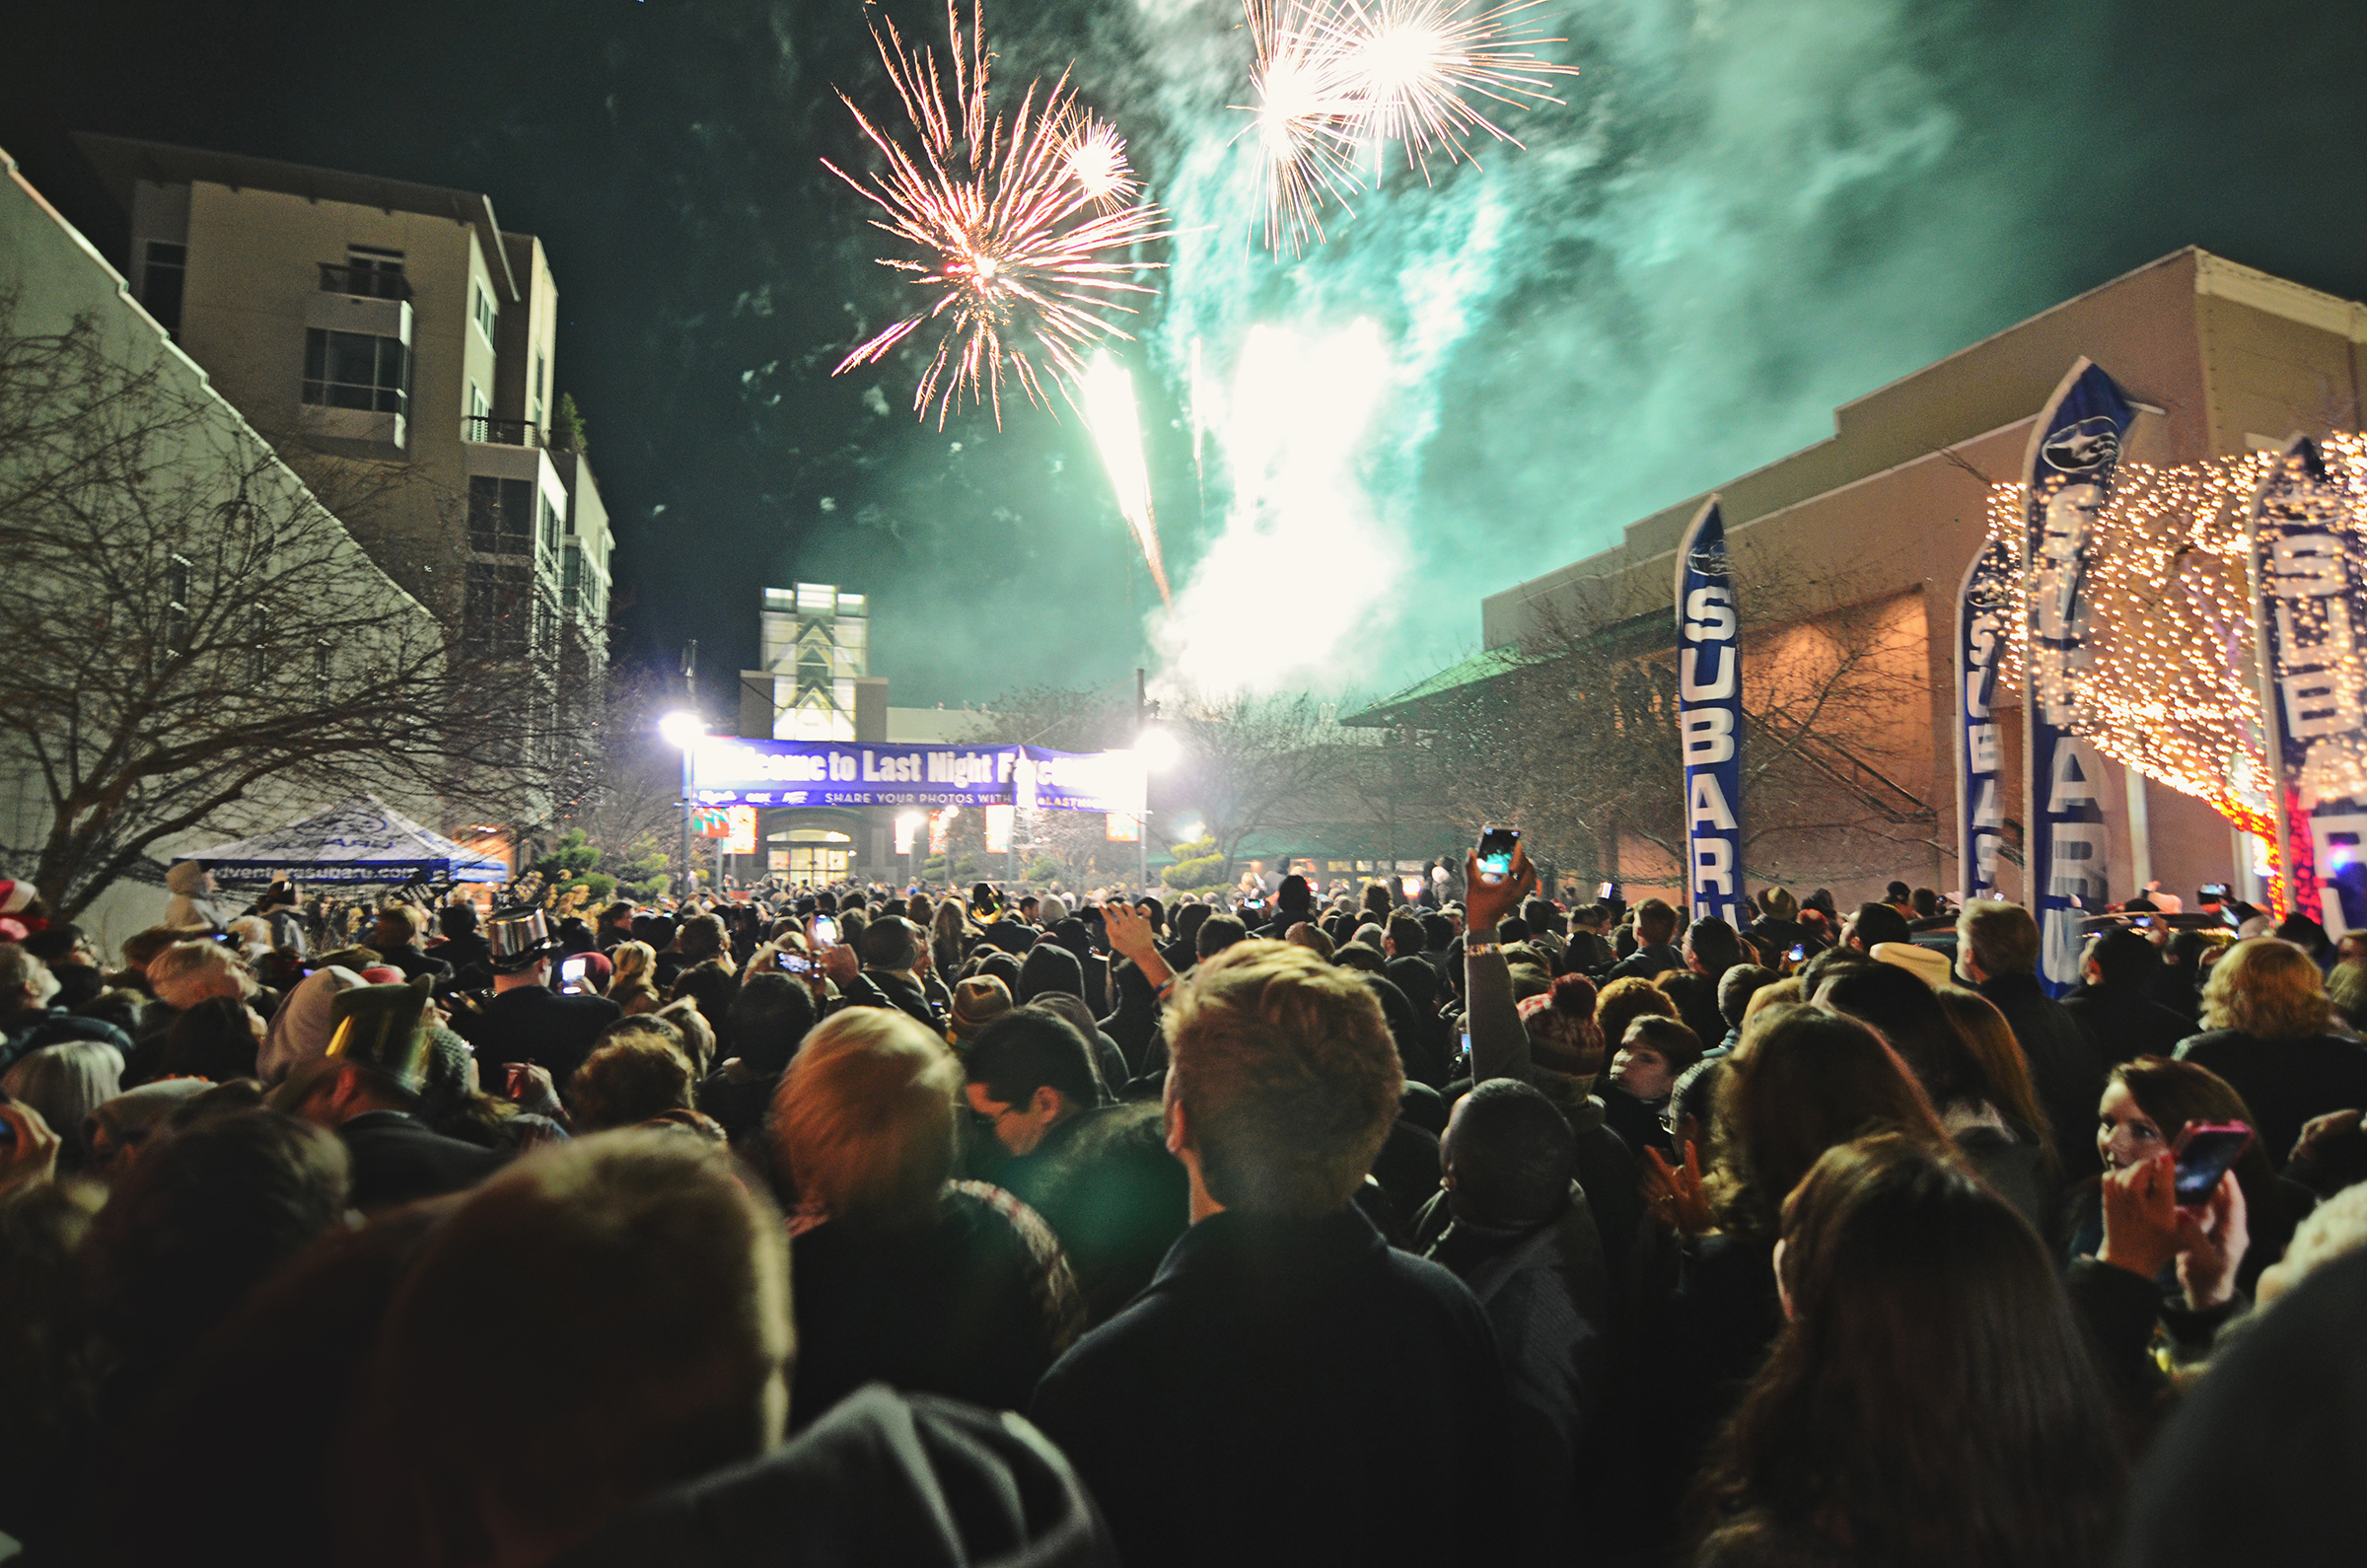 LAST NIGHT FAYETTEVILLE TURNS FIVE Arkansas’s Largest New Year’s Eve